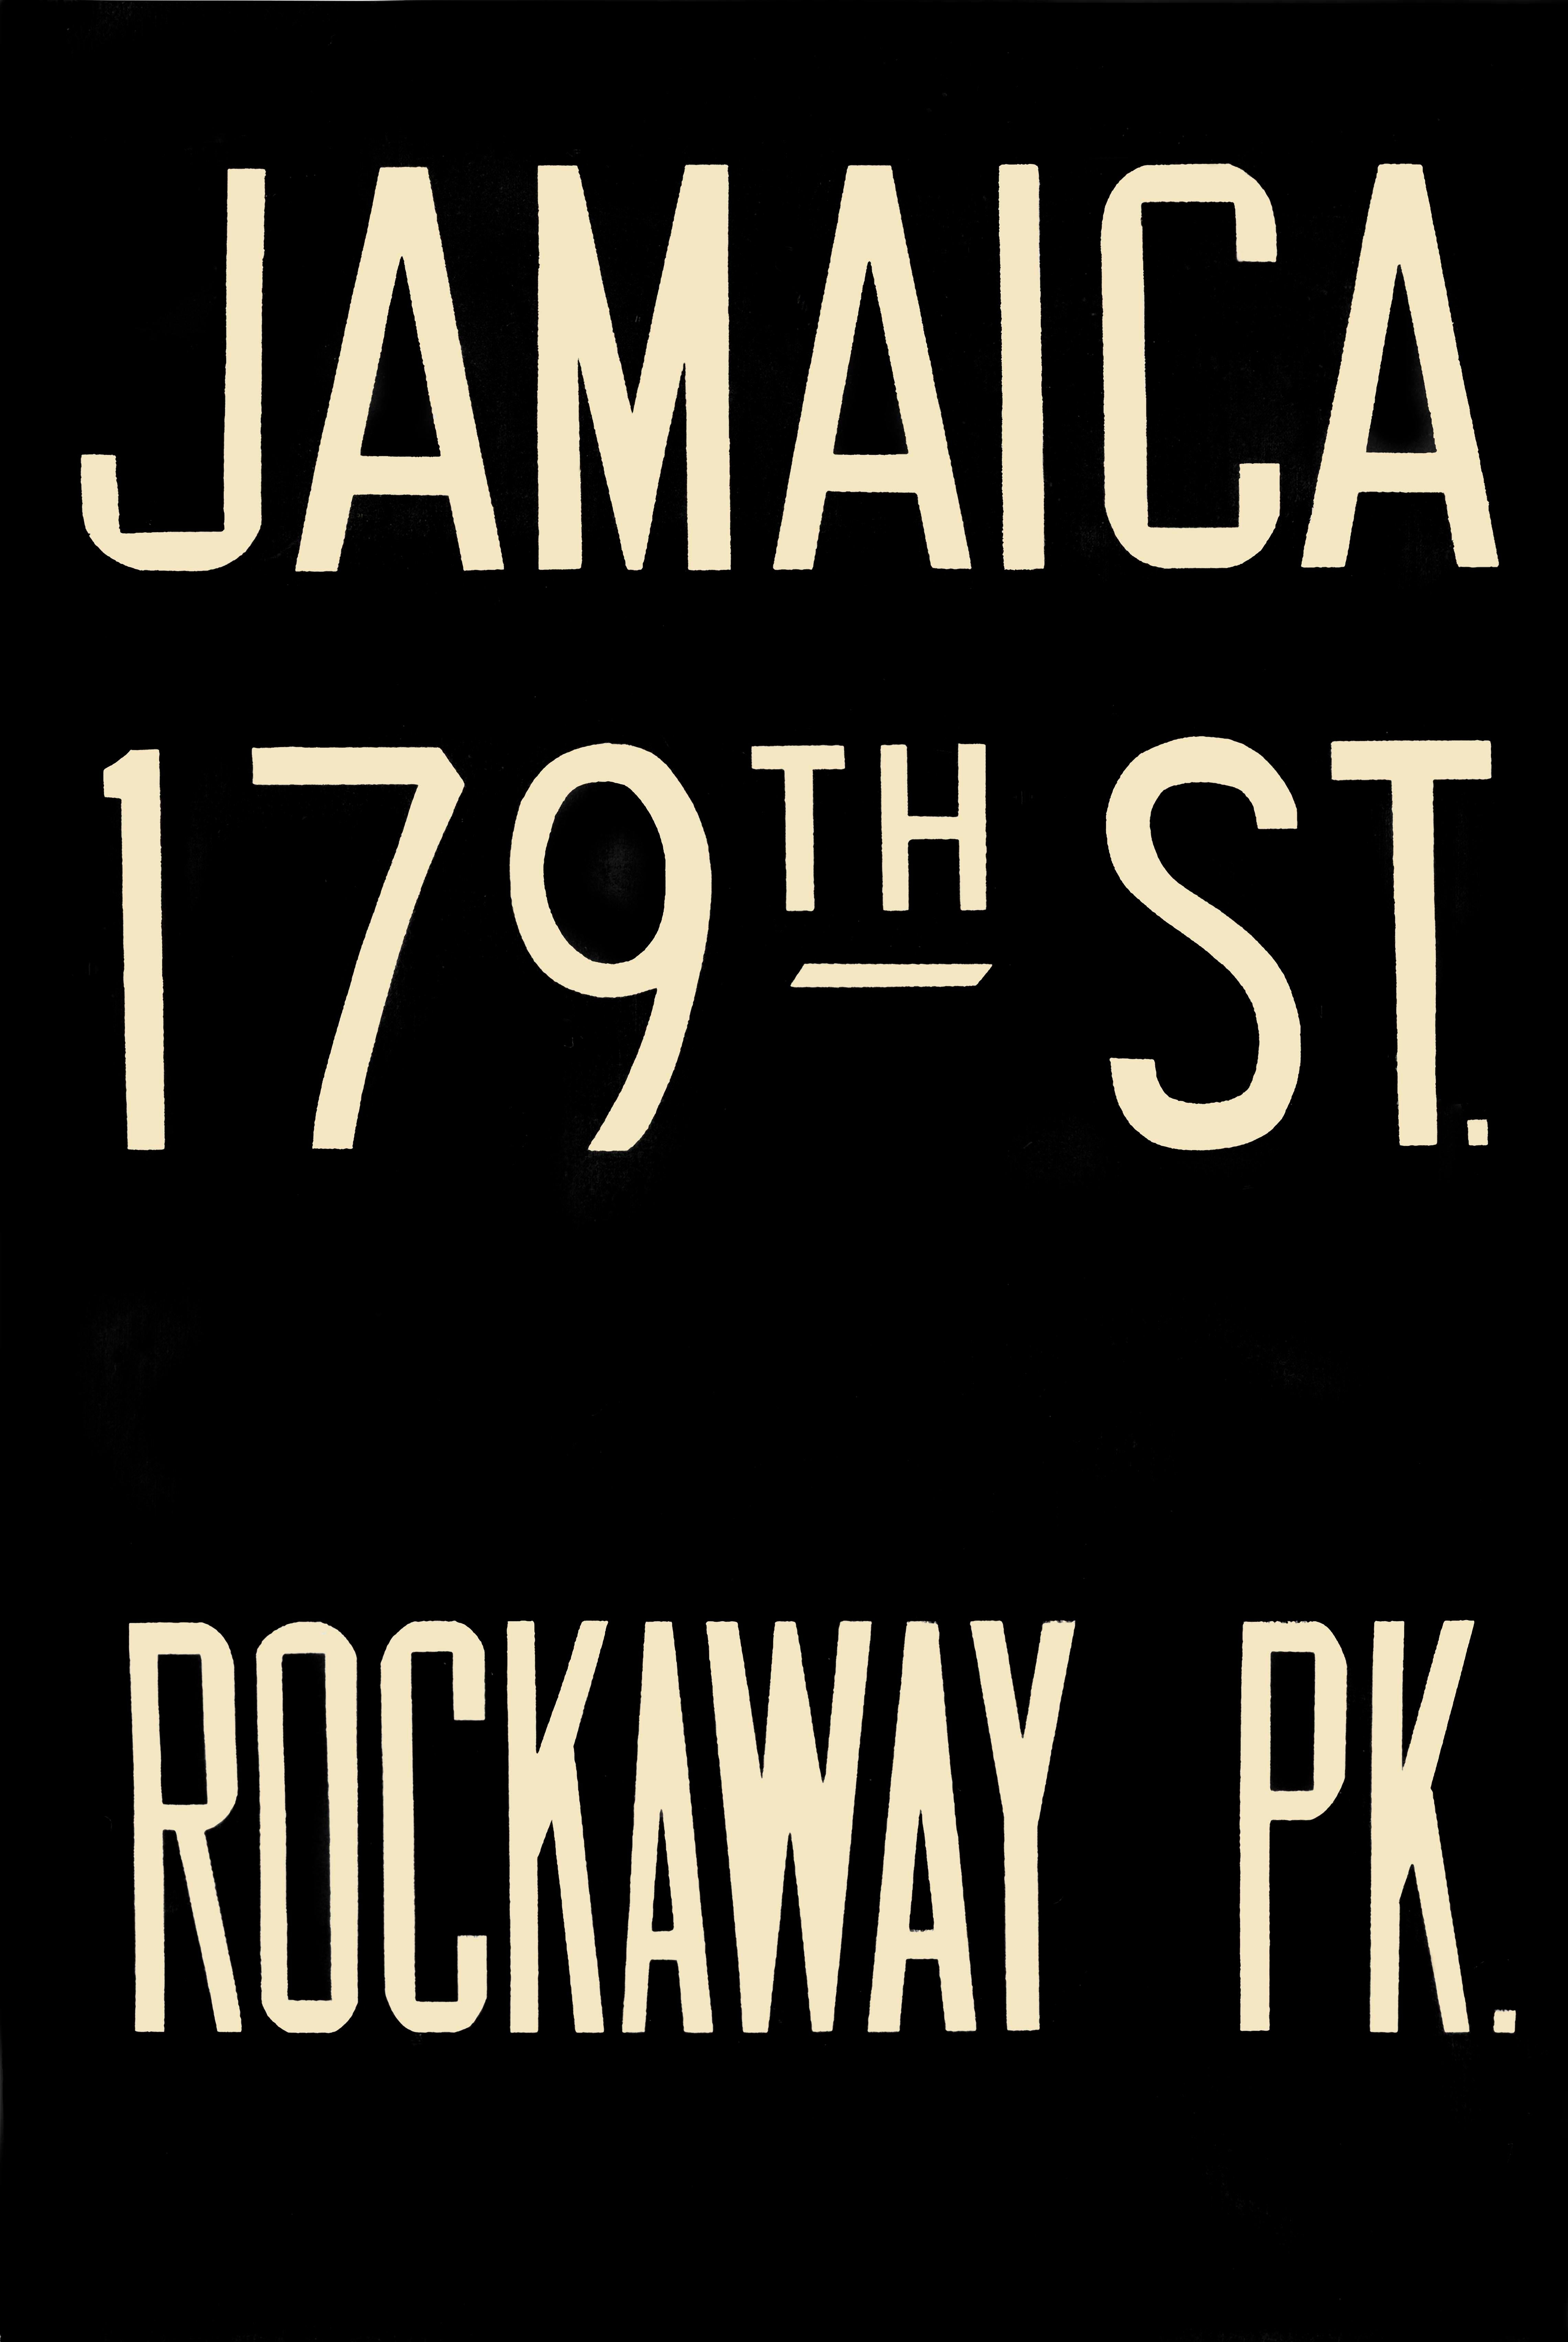 Unknown Figurative Print - NYC subway sign - Jamaica 179th St / Rockaway Pk